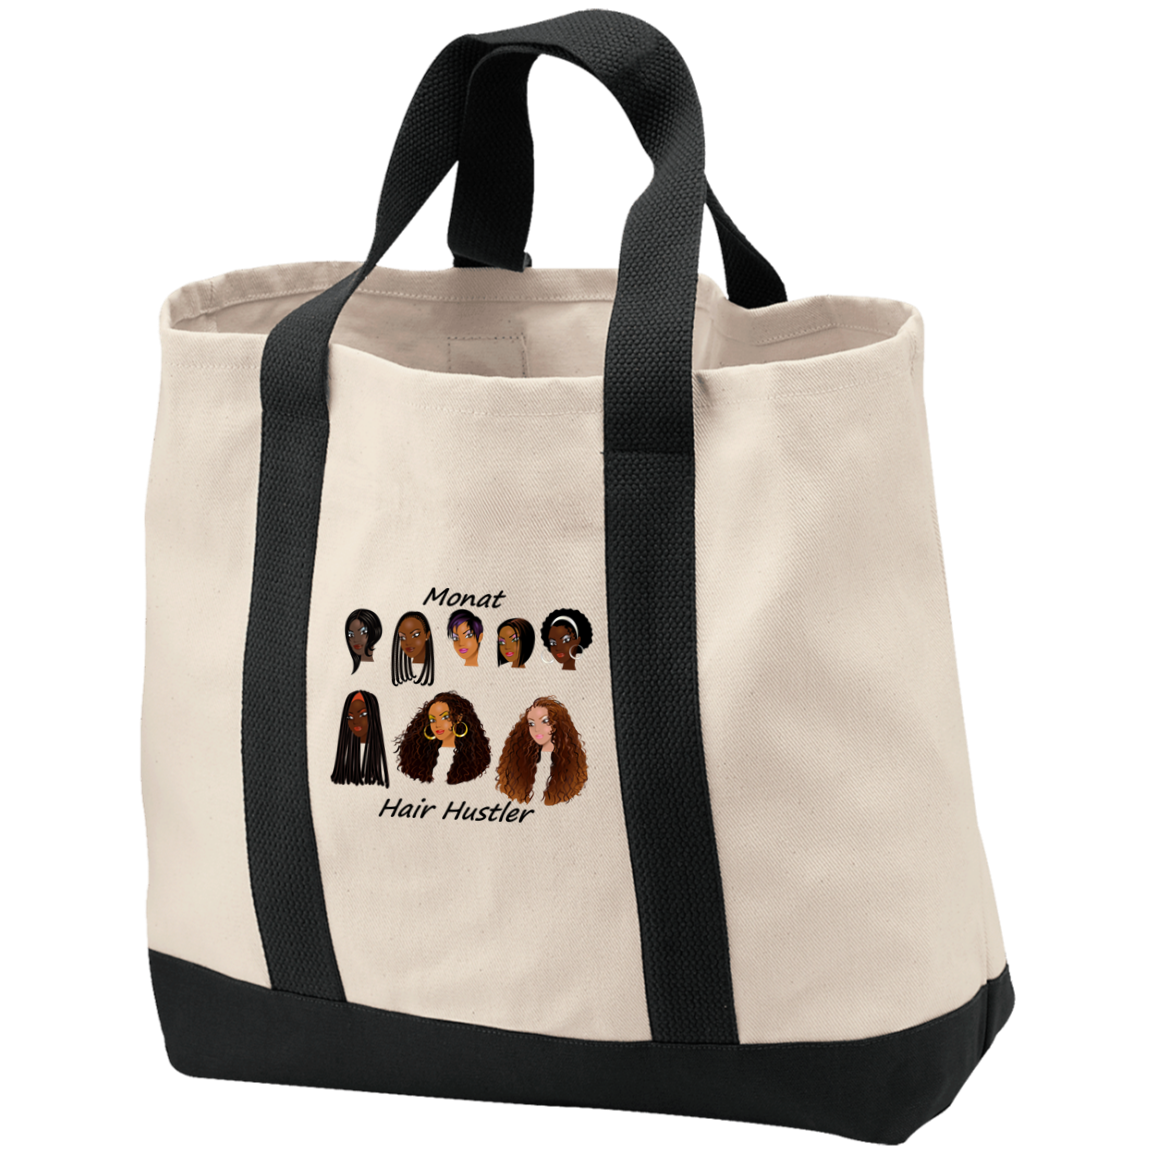 Monat Hair Hustler Embroidered 2-Tone Shopping Tote Bag | Monat Gear | Monat Tote Bag